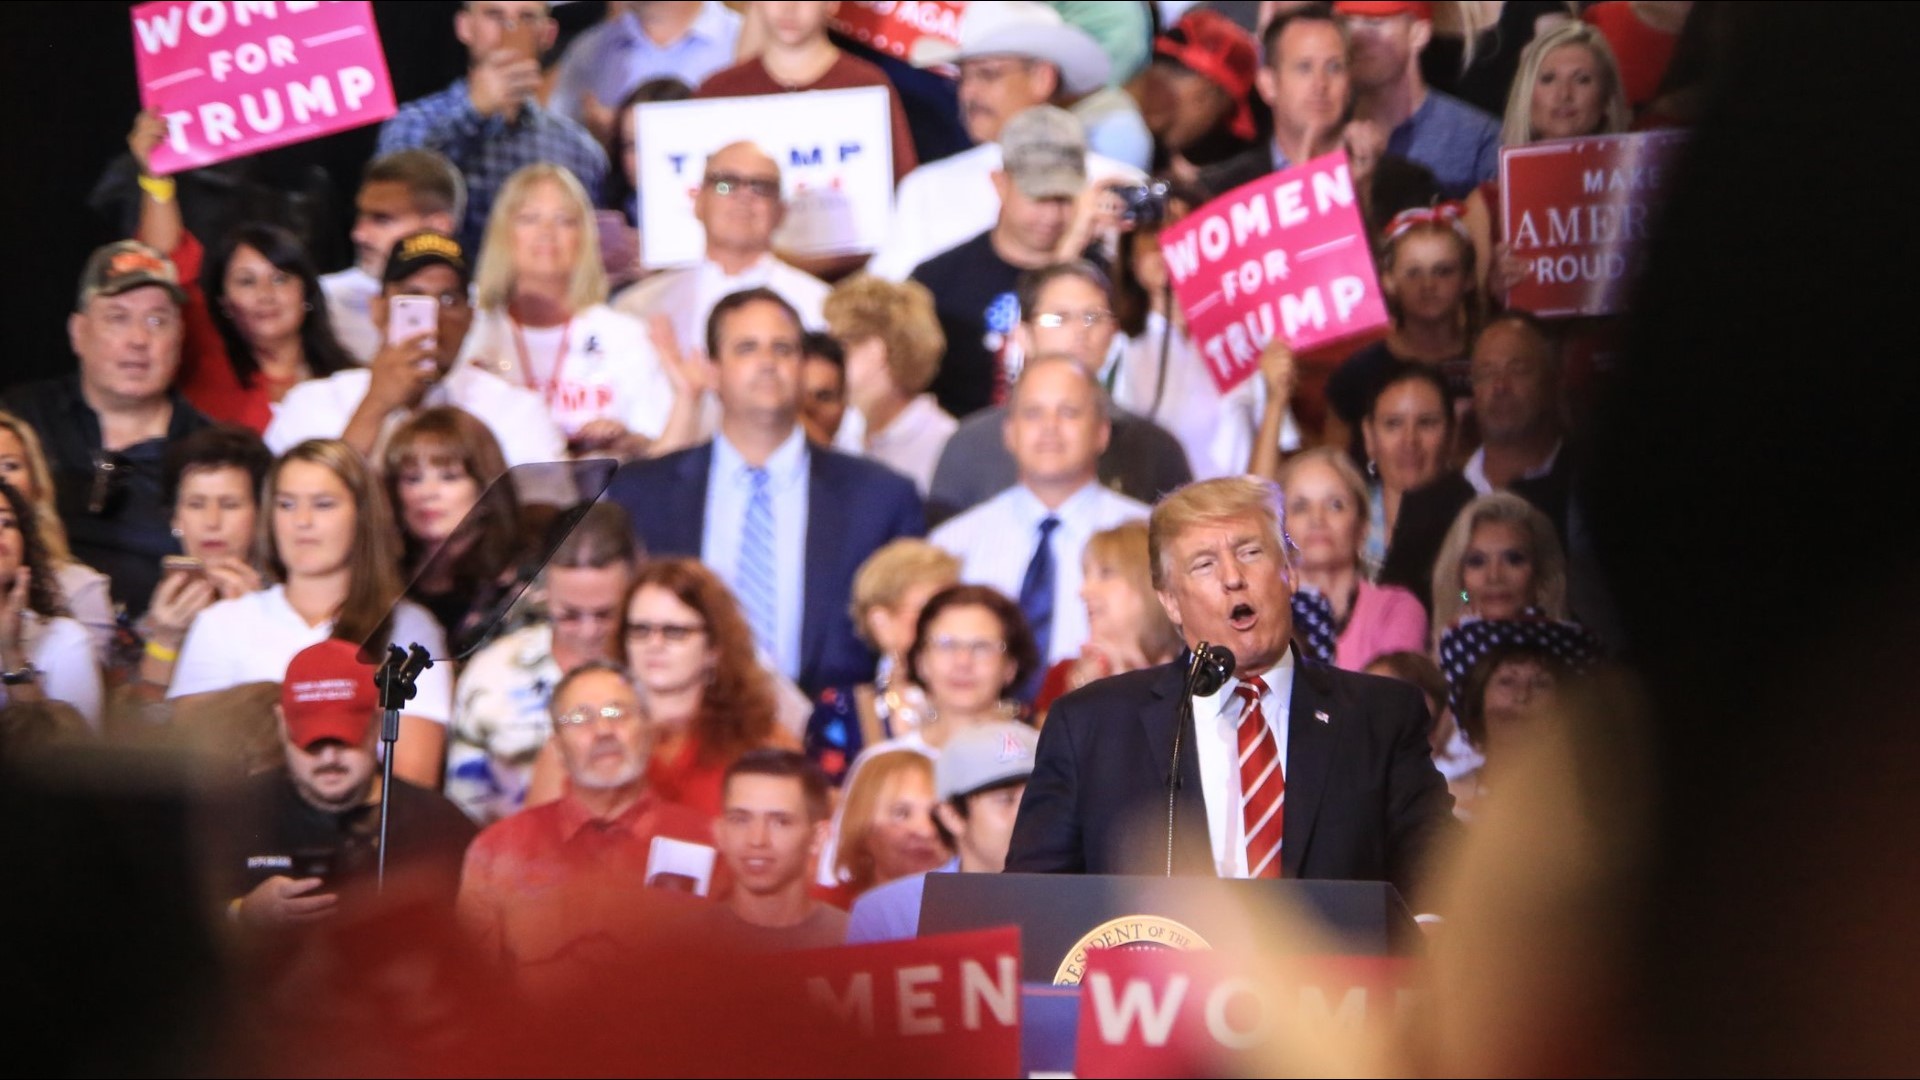 PHOTOS Inside the Phoenix Trump rally